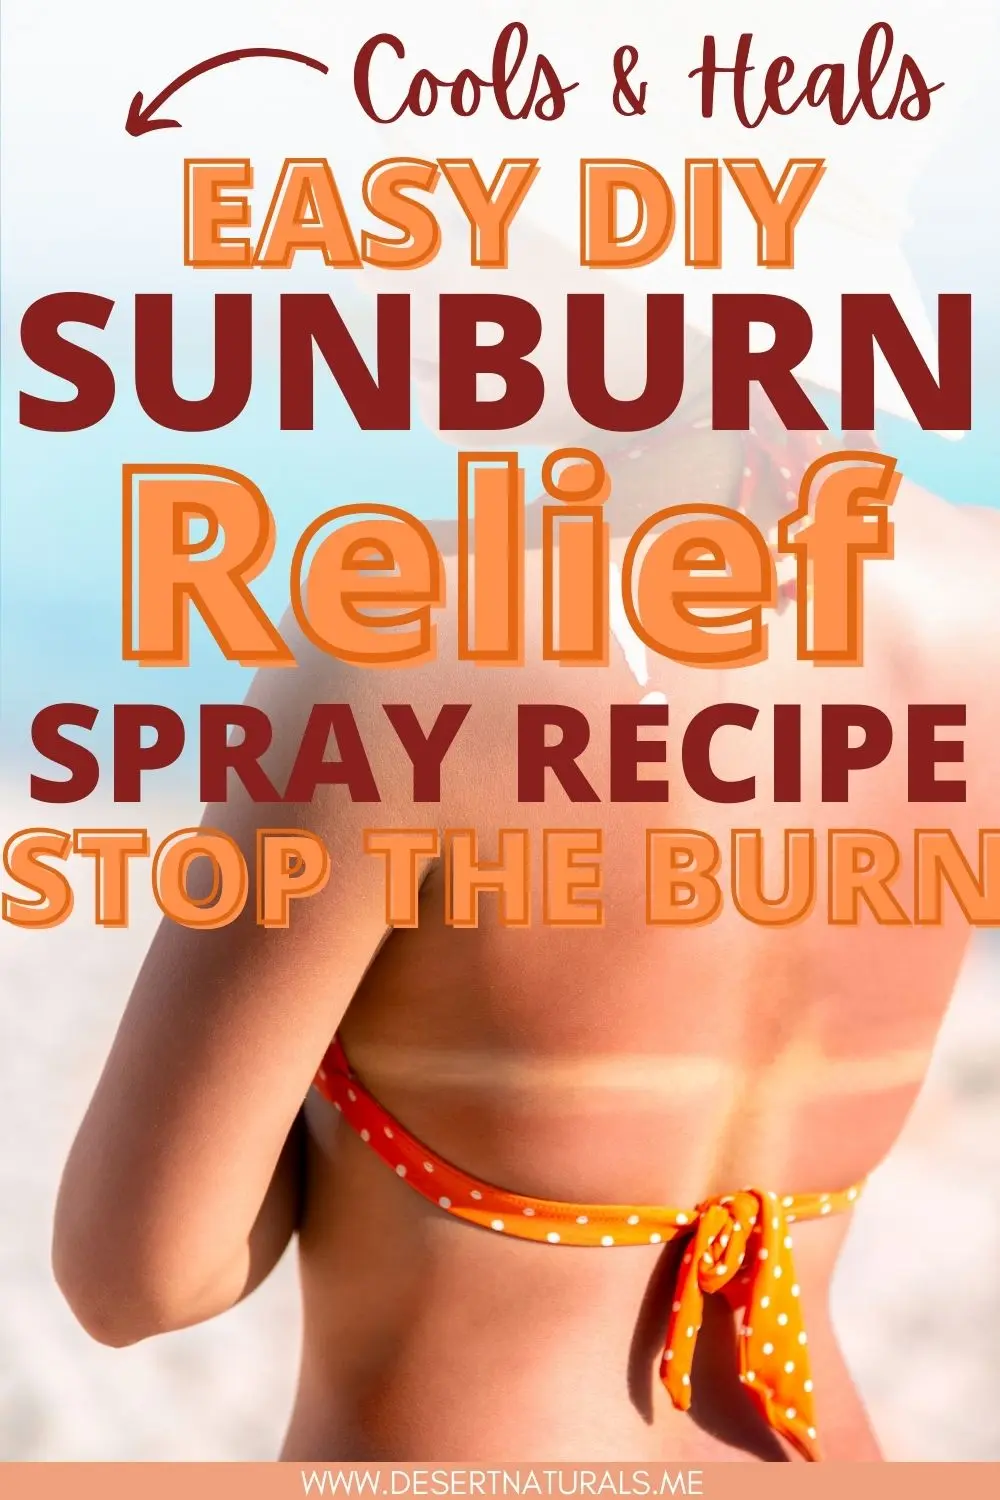 sunburn relief spray recipe pin with woman's sunburned back